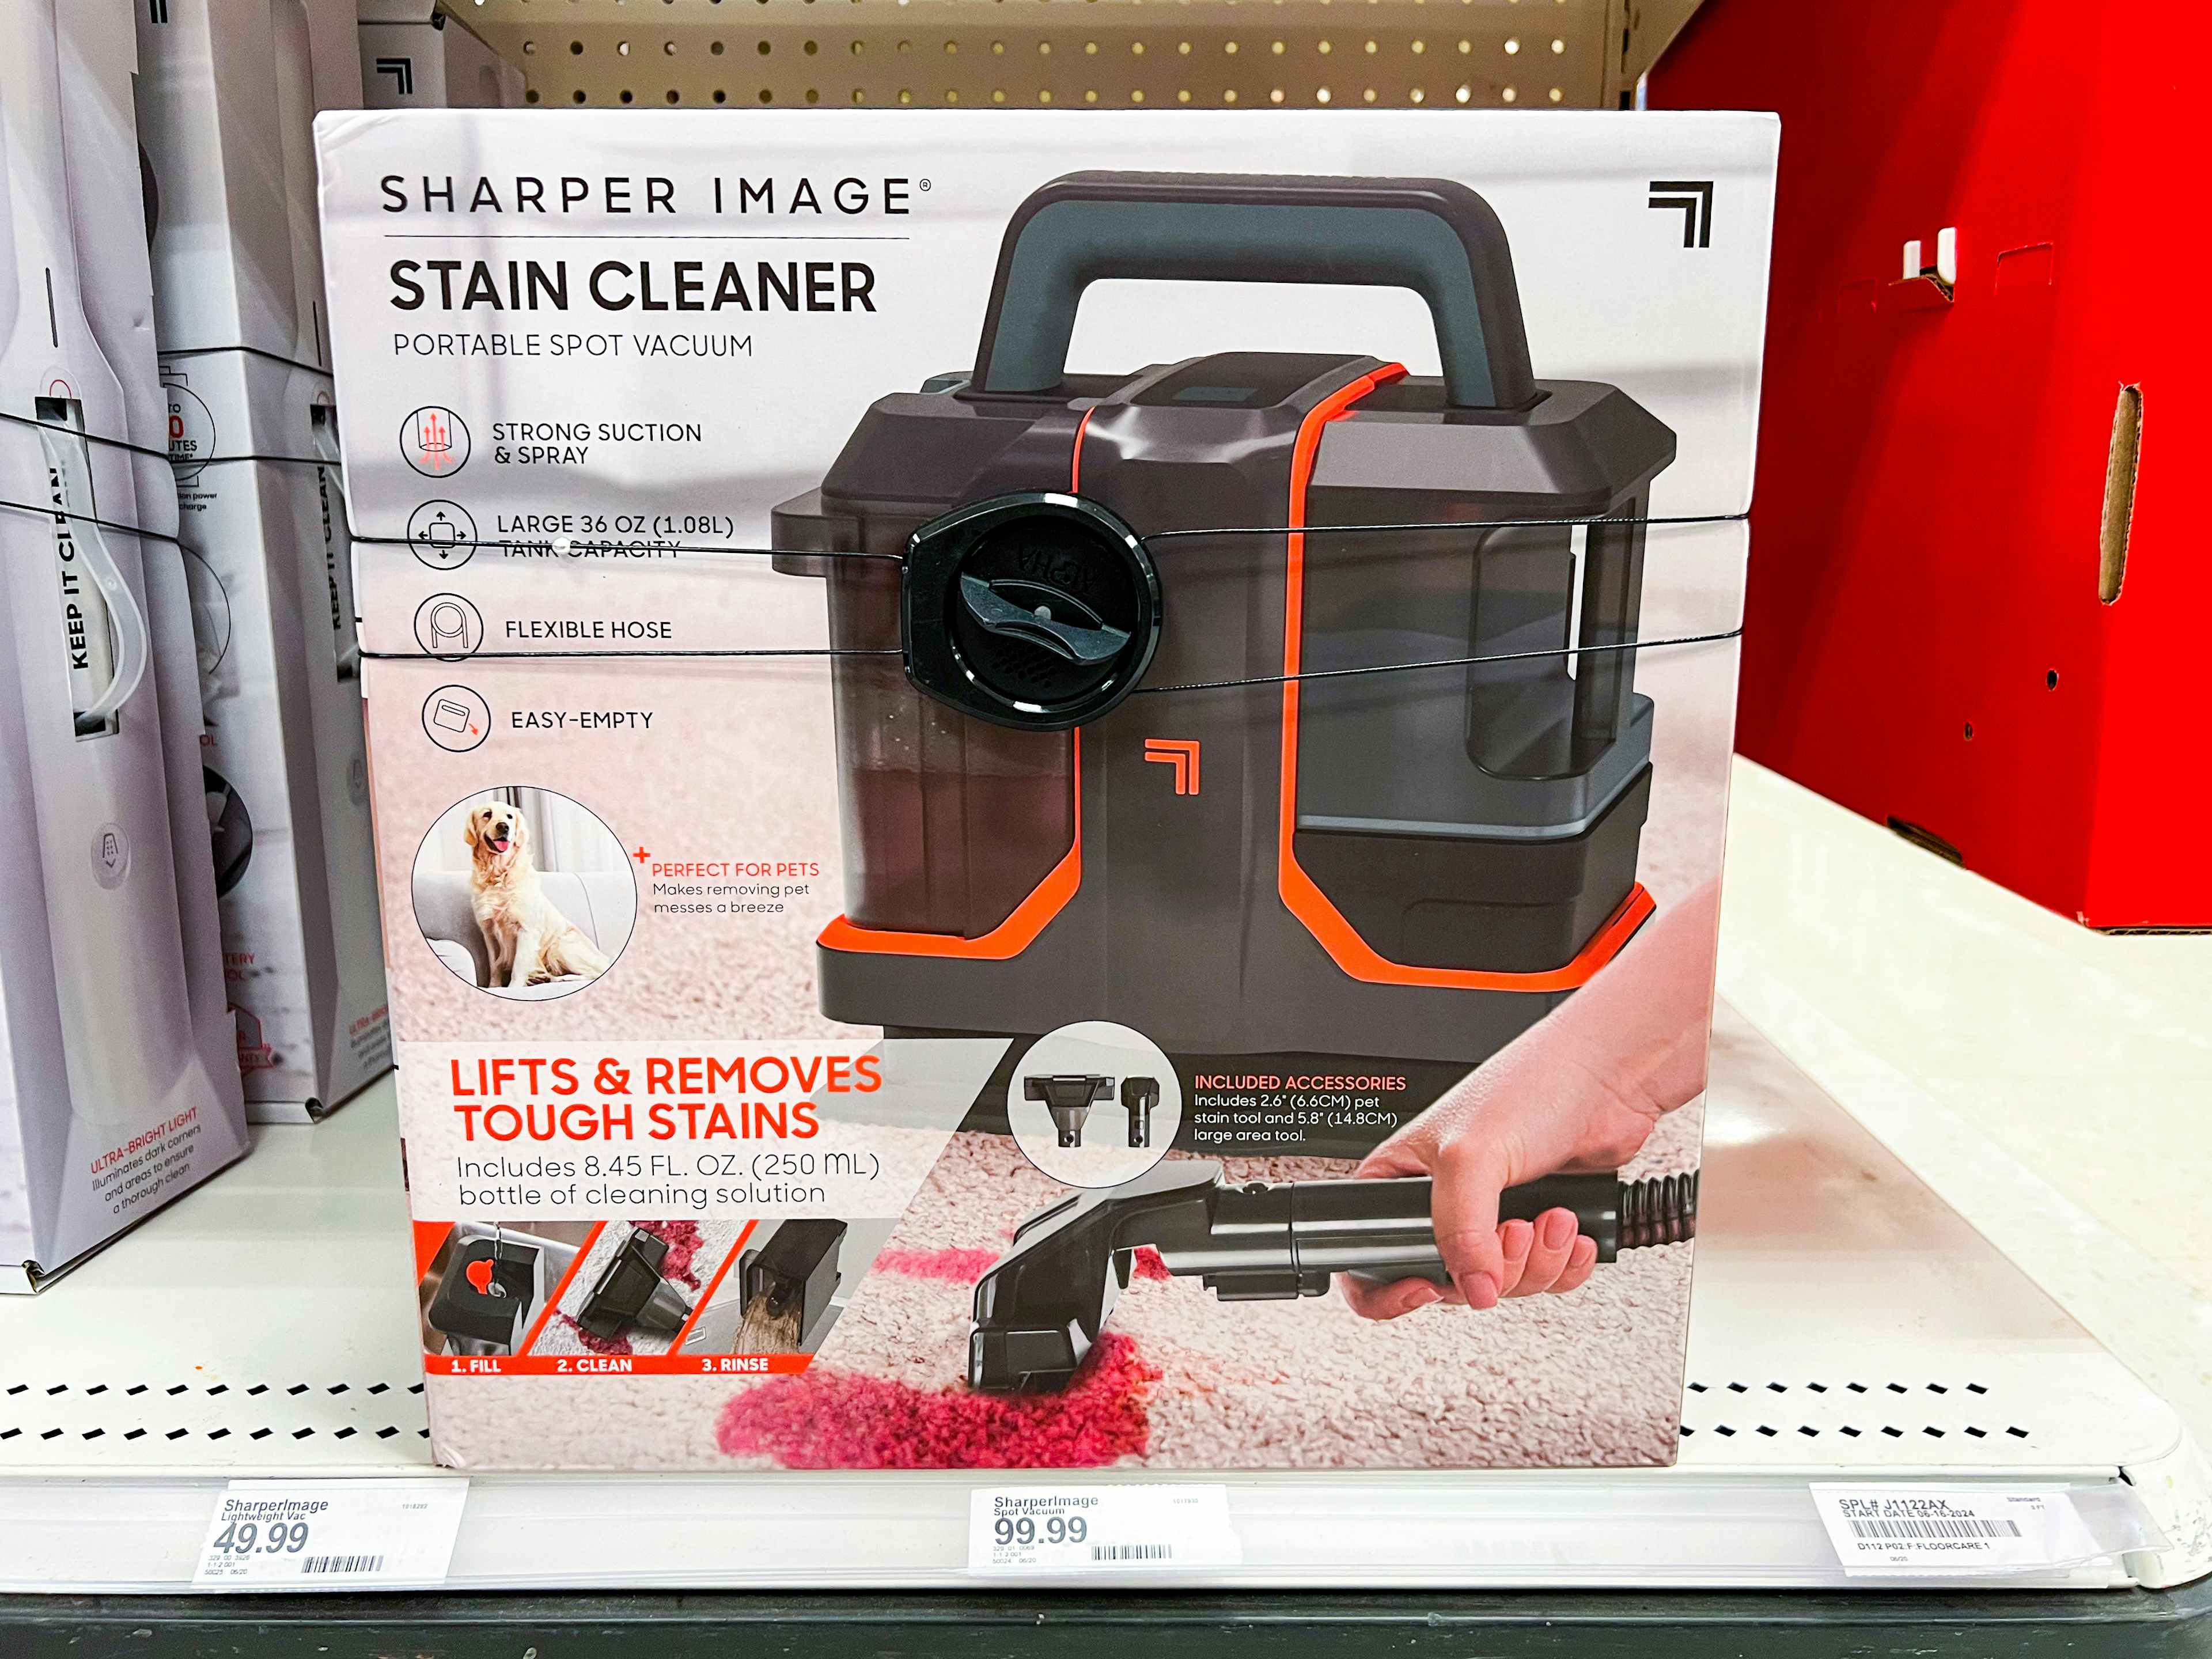 sharper-image-stain-cleaner-target-3